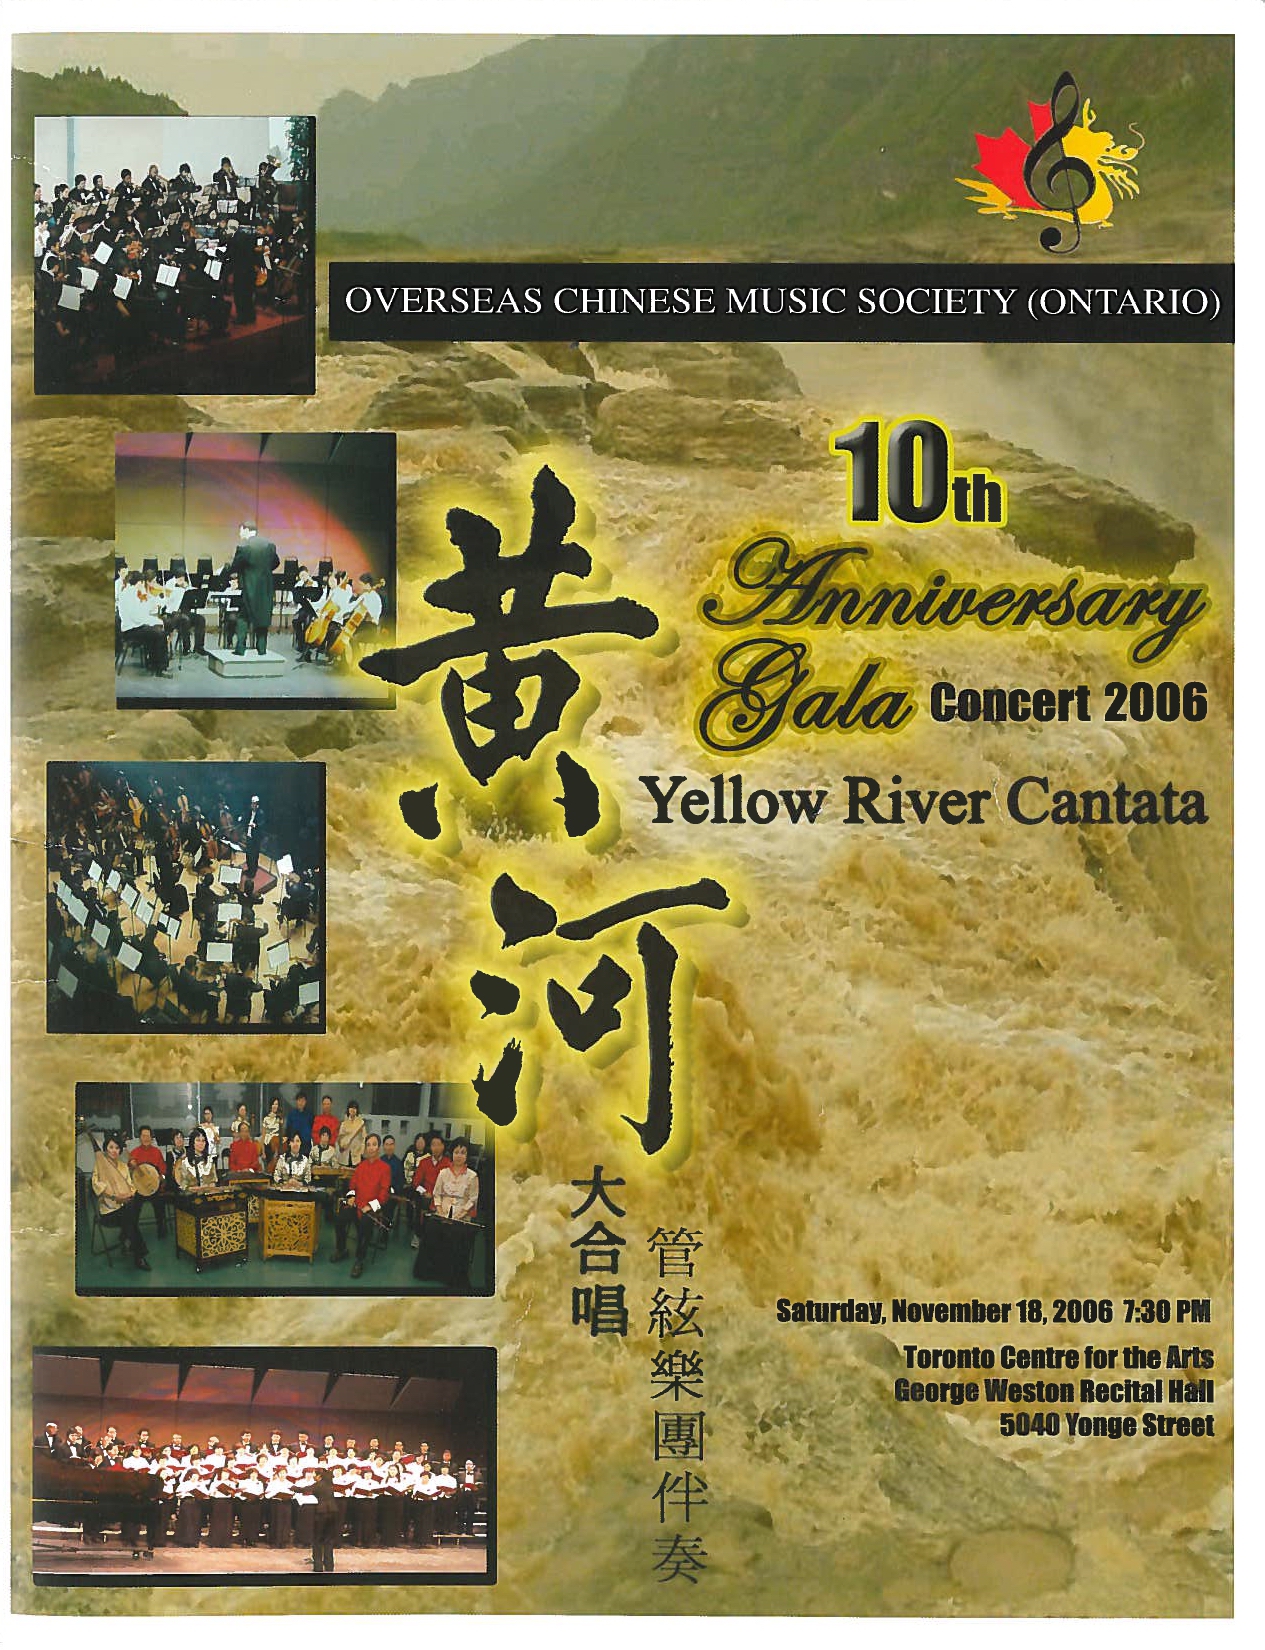 OCMS 10th Anniversary Gala Concert 2006 - Yellow River Cantata